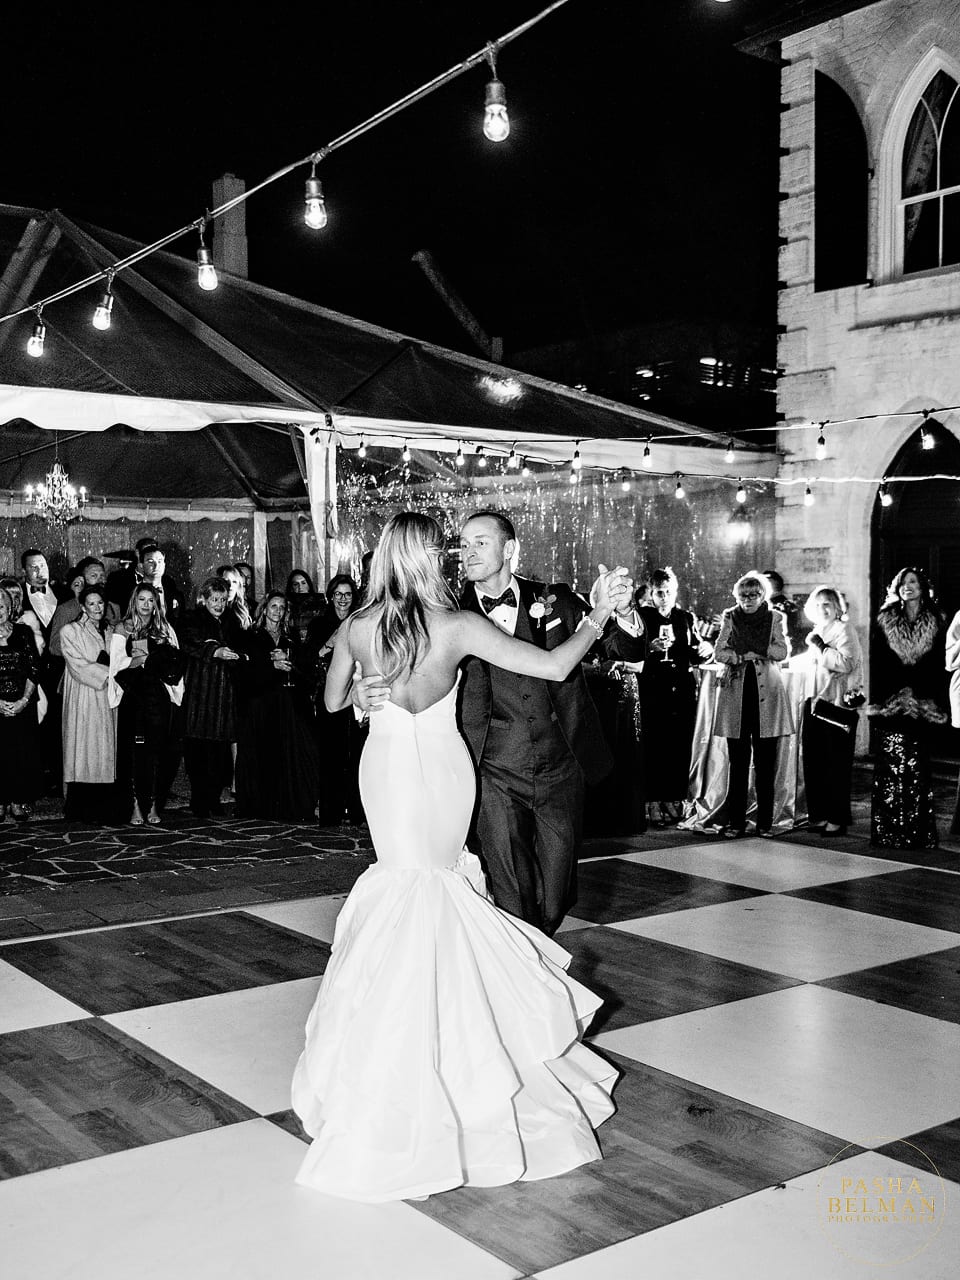 Charleston Wedding Photography - Top Charleston Wedding Photographers - The William Aiken House Wedding by Pasha Belman